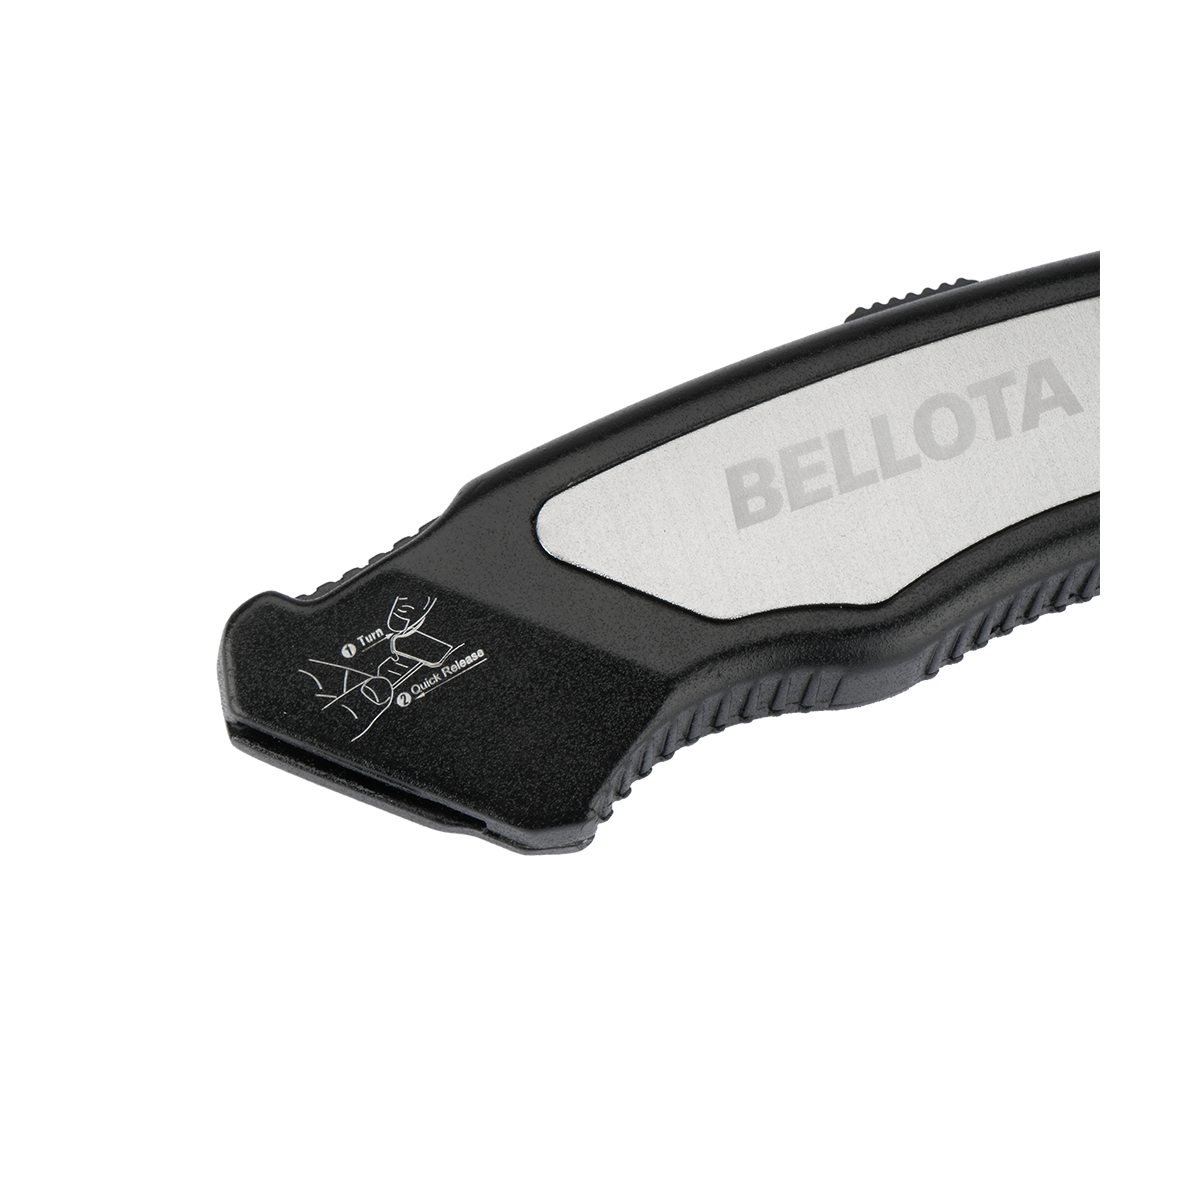 Fotos de ambiente do cortador de metal Bellota 51407 19mm Corte preciso [52777].